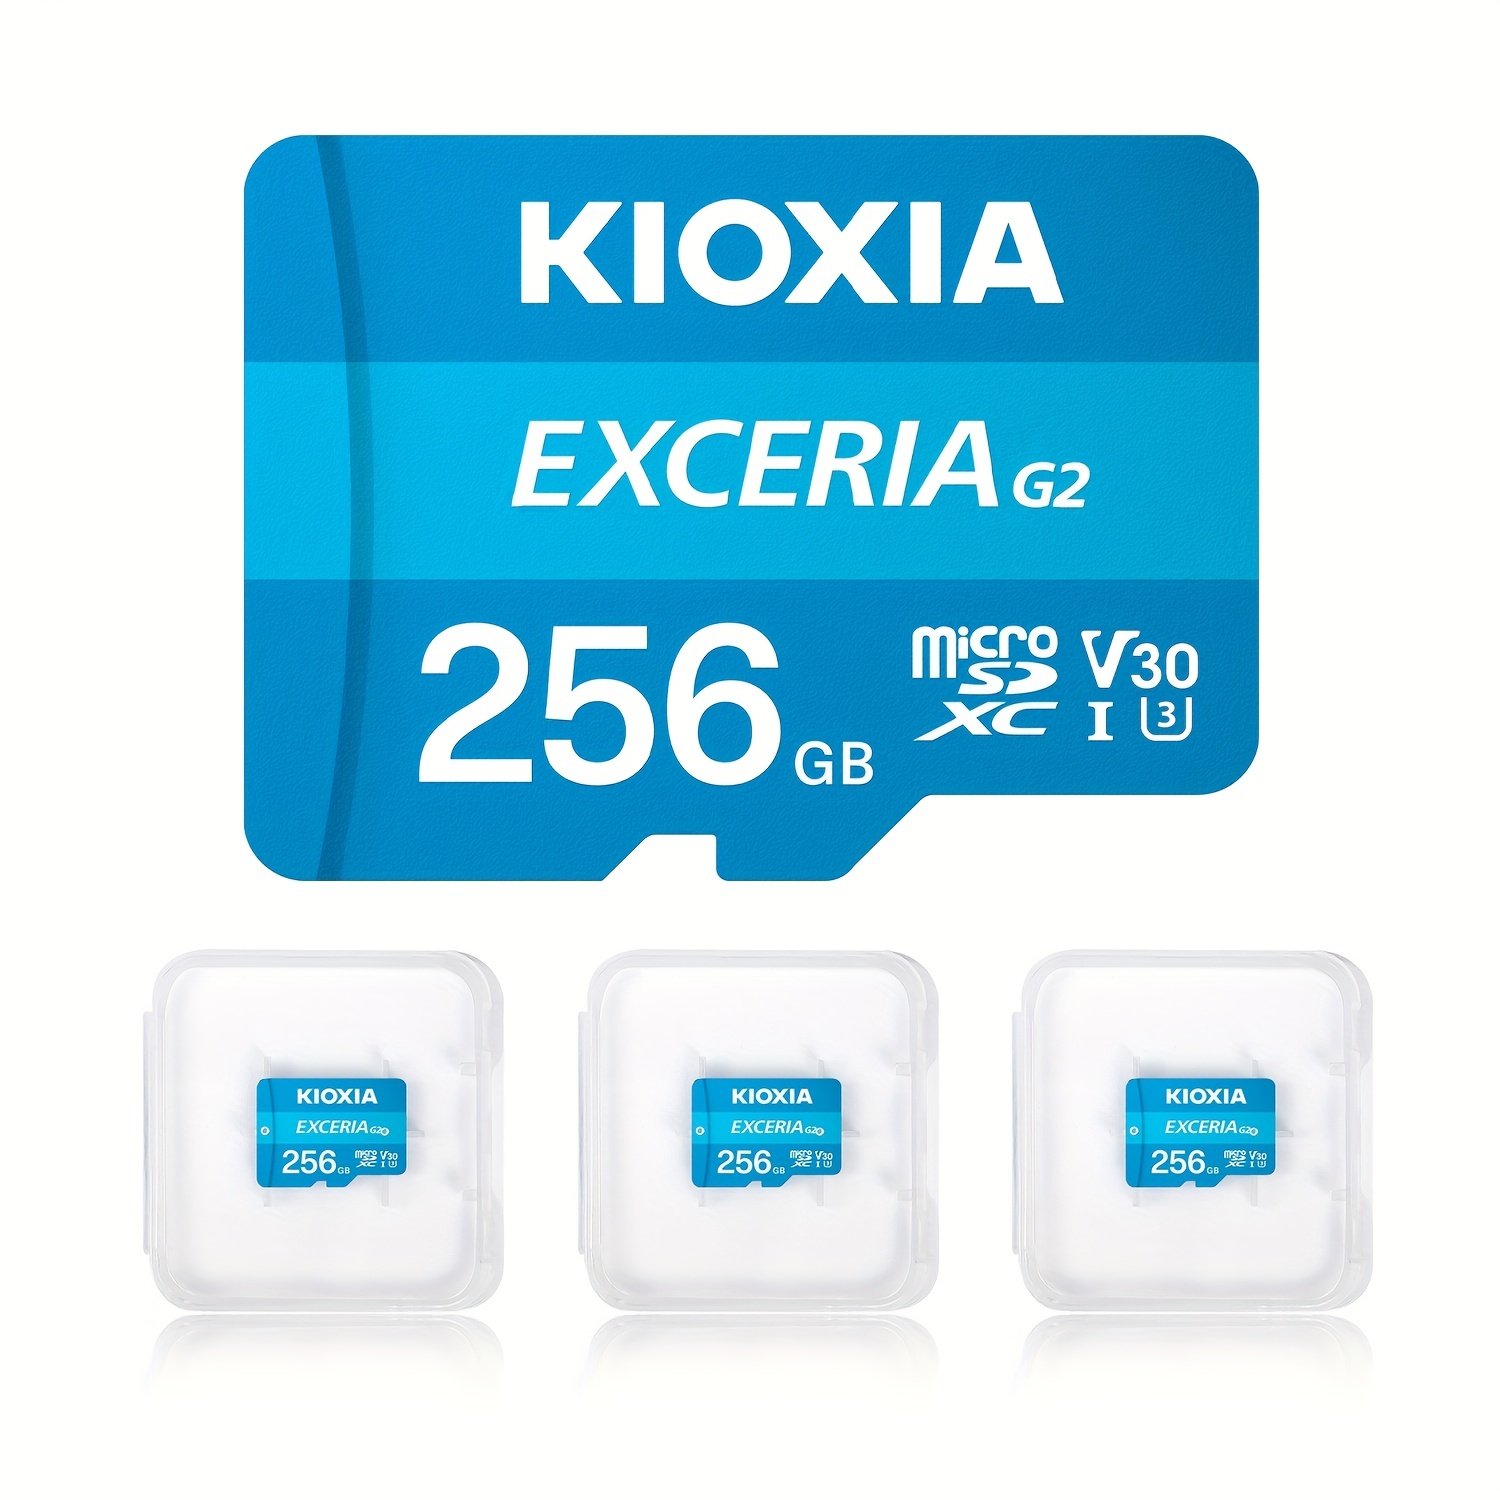 KEXIN Carte Micro SD 128GB + Adaptateur SD 64GB 32GB Carte Mémoire